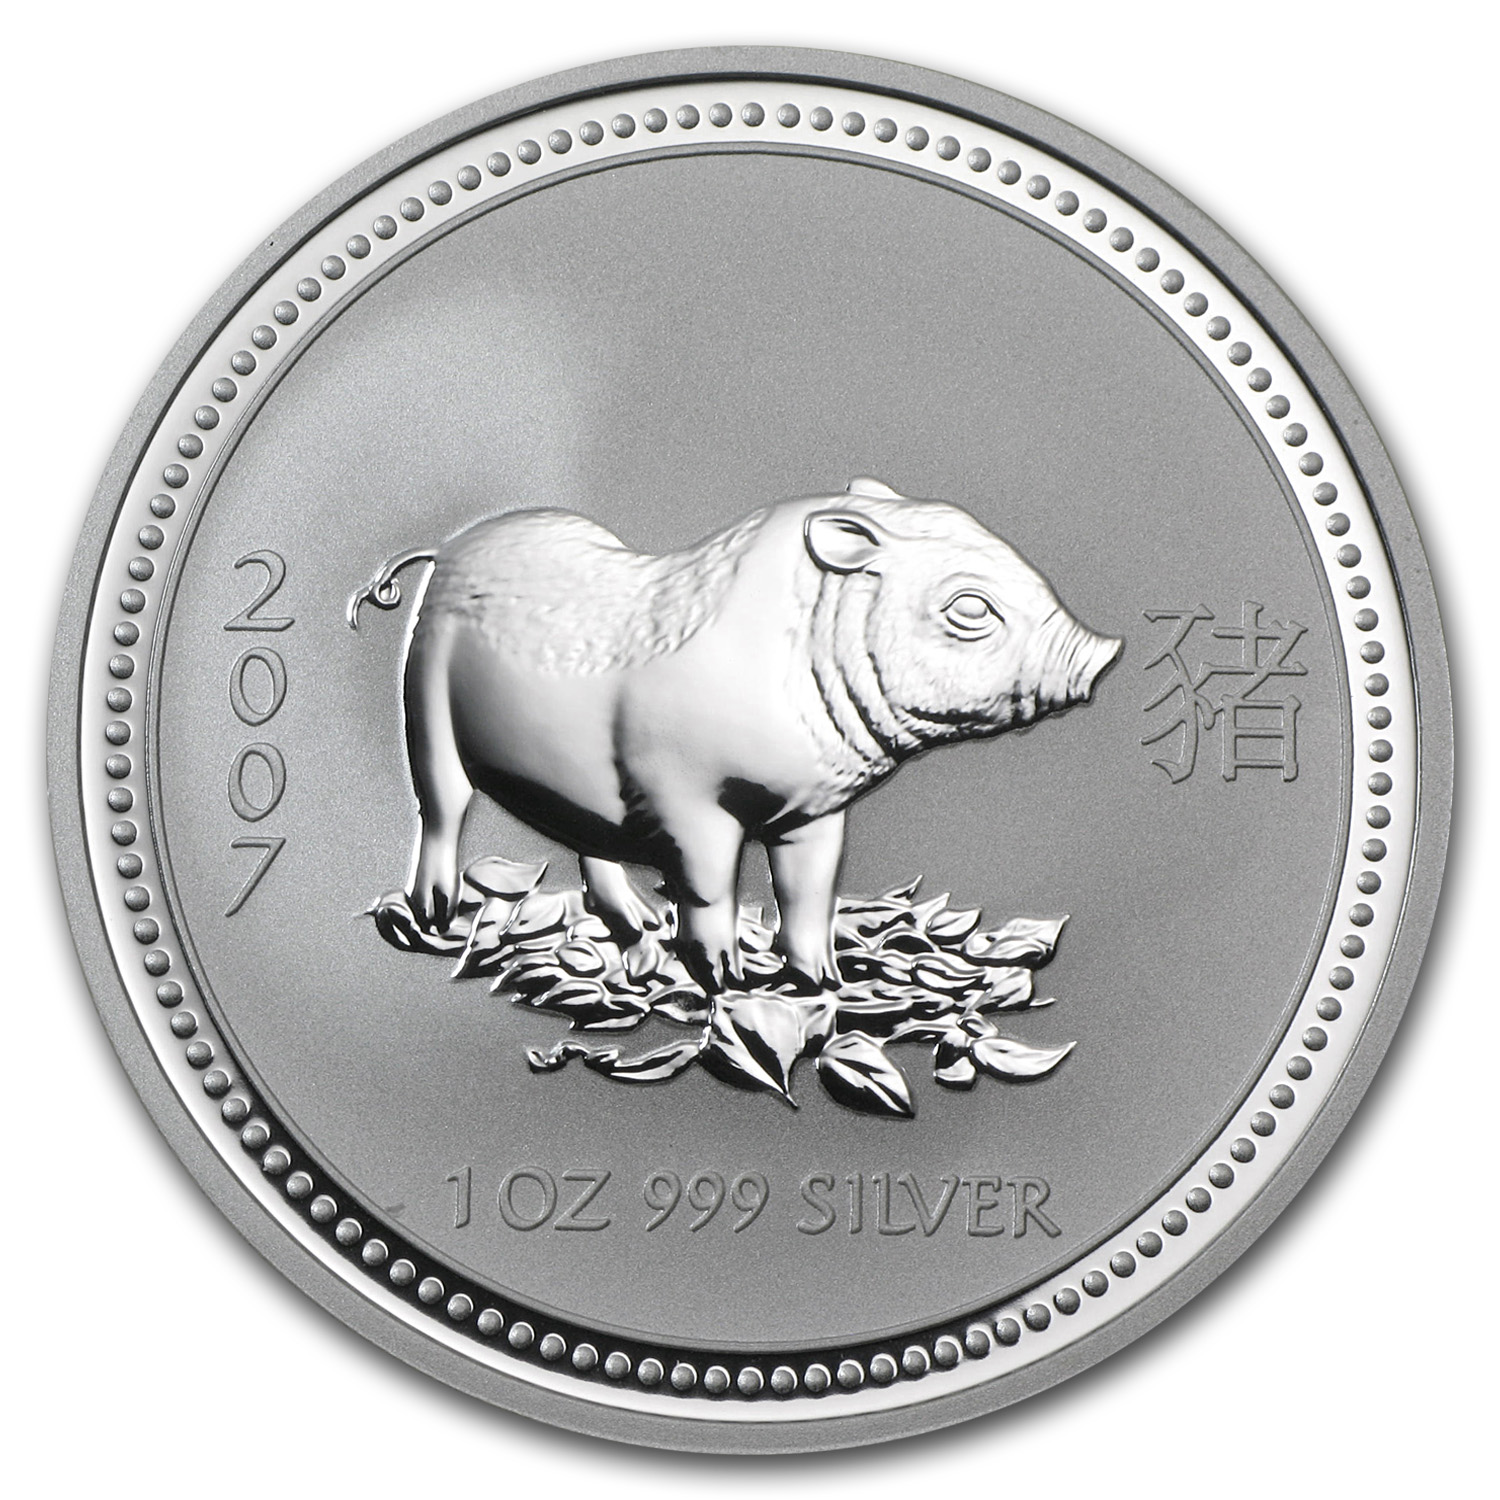 Buy 2007 Australia 1 oz Silver Year of the Pig BU (Series I)